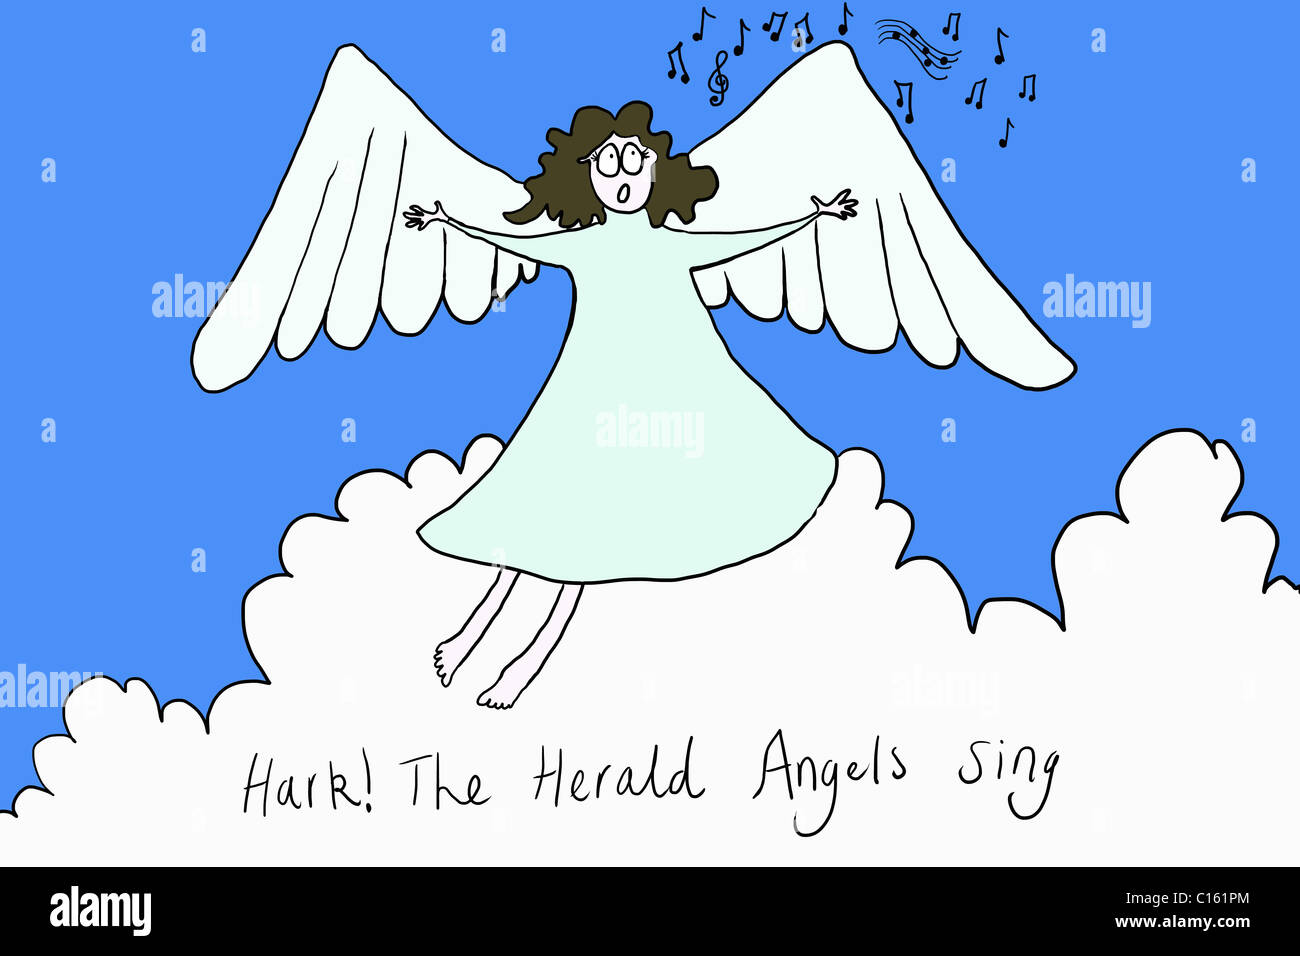 Engel singen Hör Herald Angels Sing, Abbildung Stockfoto